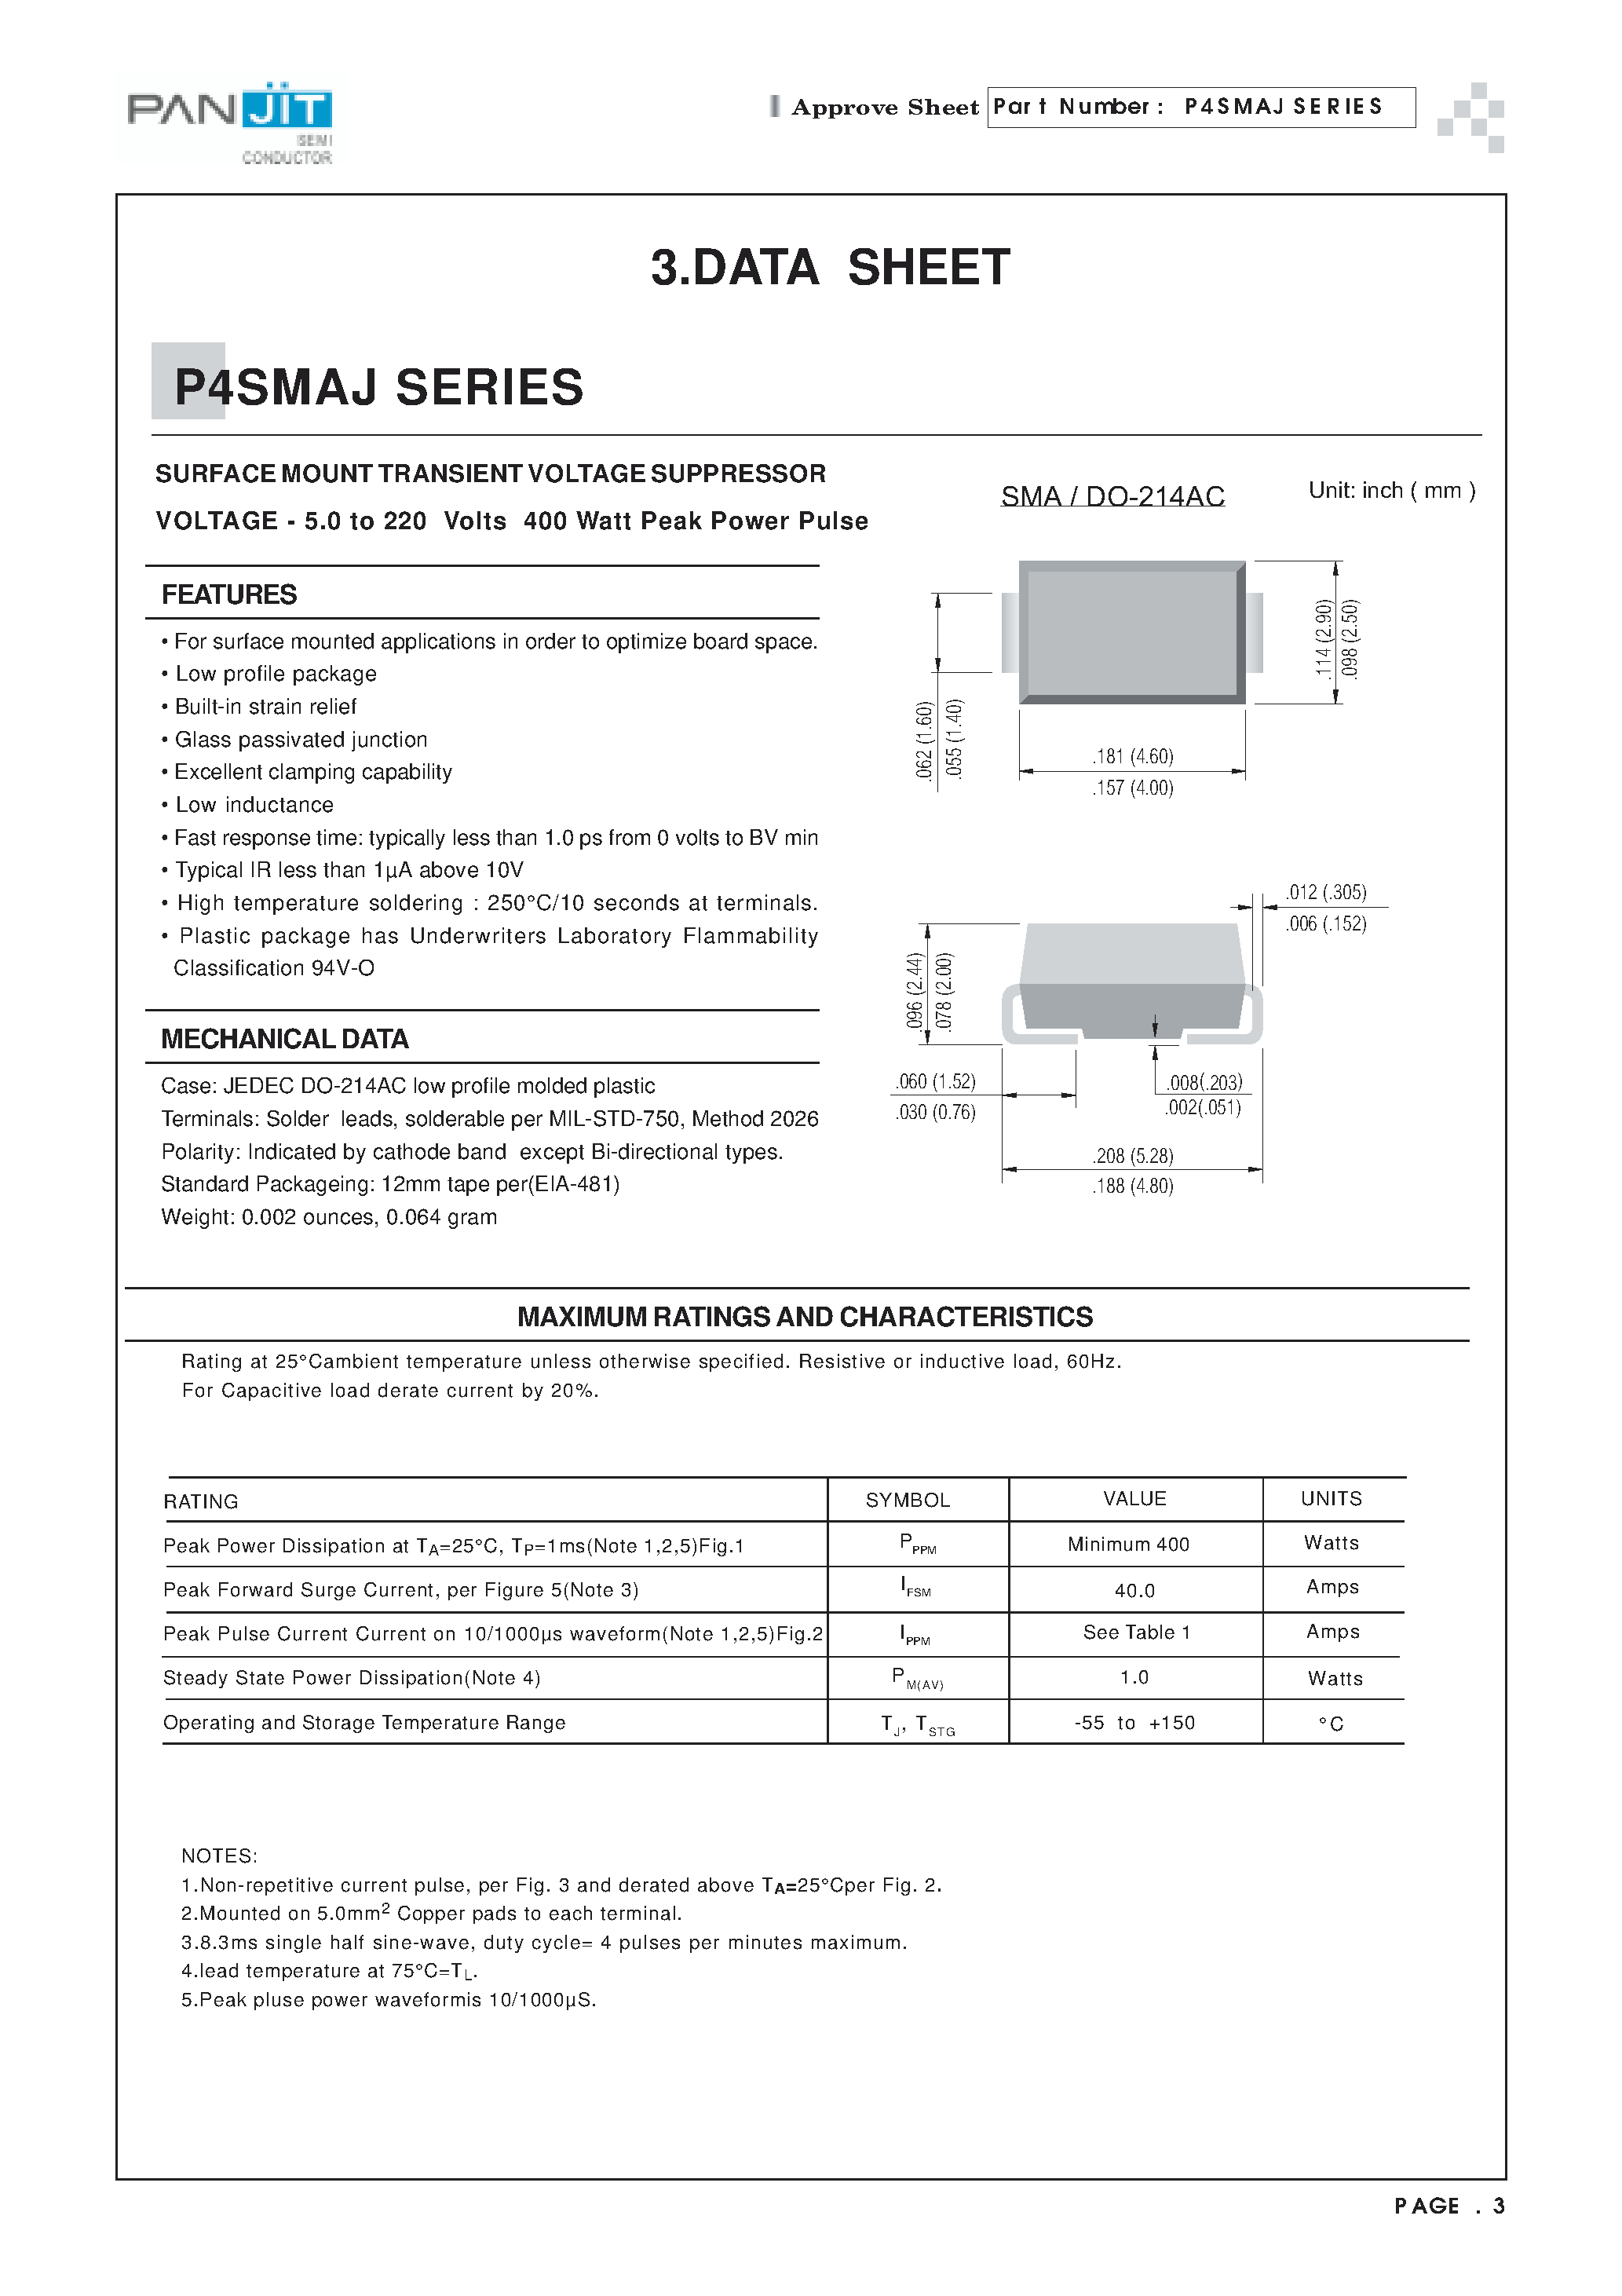 Datasheet P4SMAJ8.5 - SURFACE MOUNT TRANSIENT VOLTAGE SUPPRESSOR(VOLTAGE - 5.0 to 220 Volts 400 Watt Peak Power Pulse) page 1